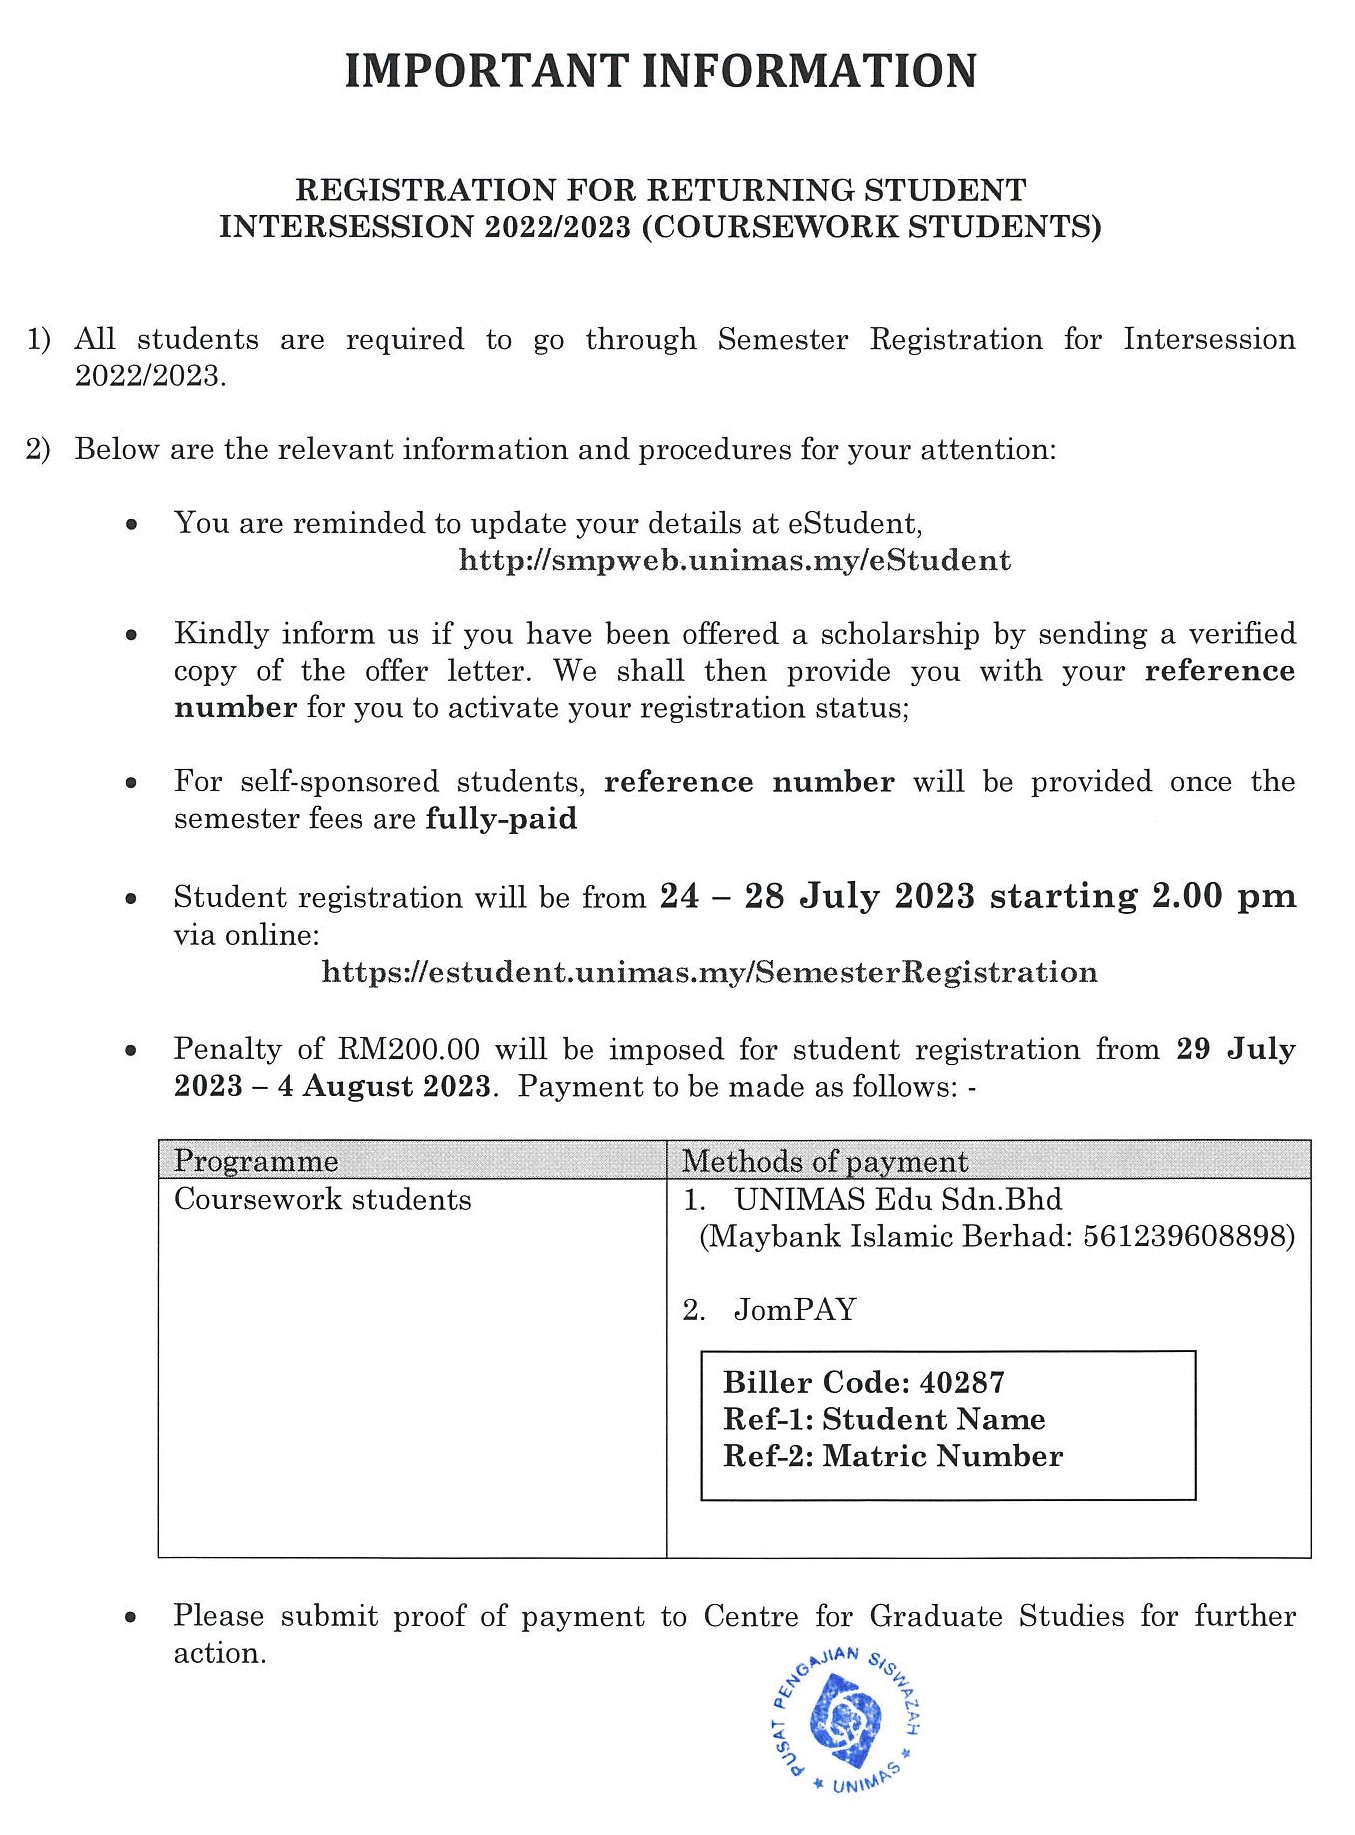 notice registration for returning student CW Intersession 2022_2023.jpg